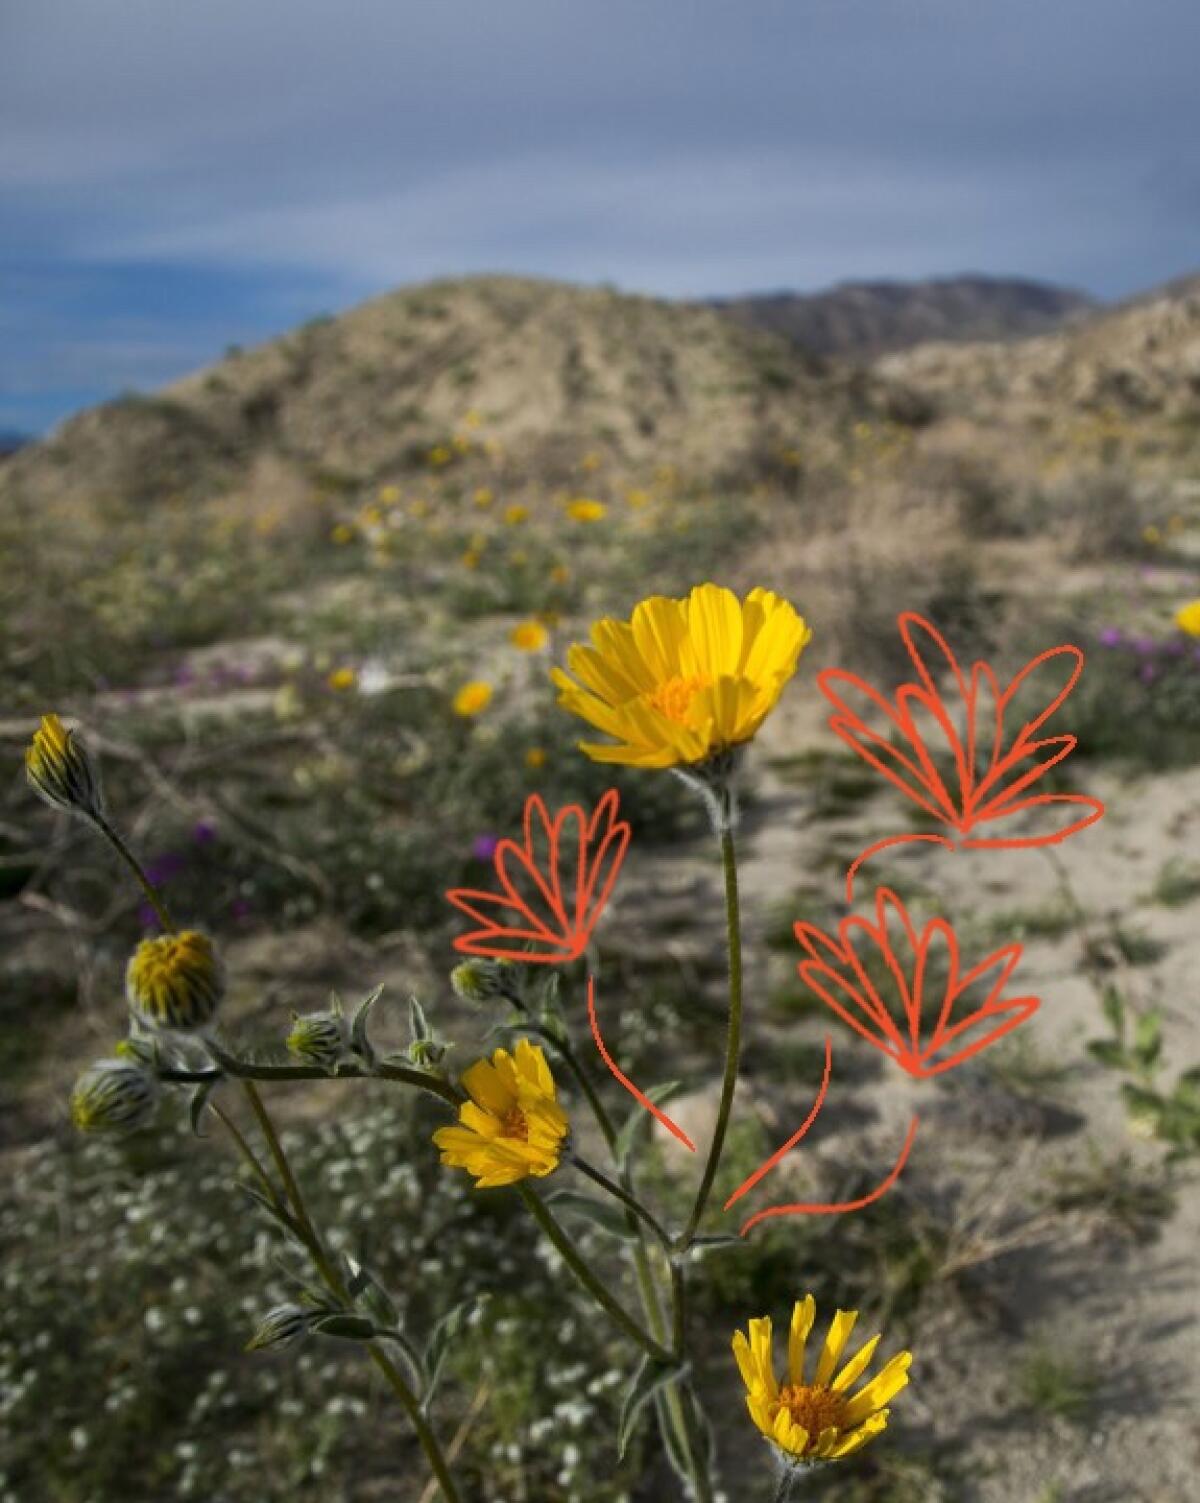 Desert sunflowers in the Anza-Borrego Desert.